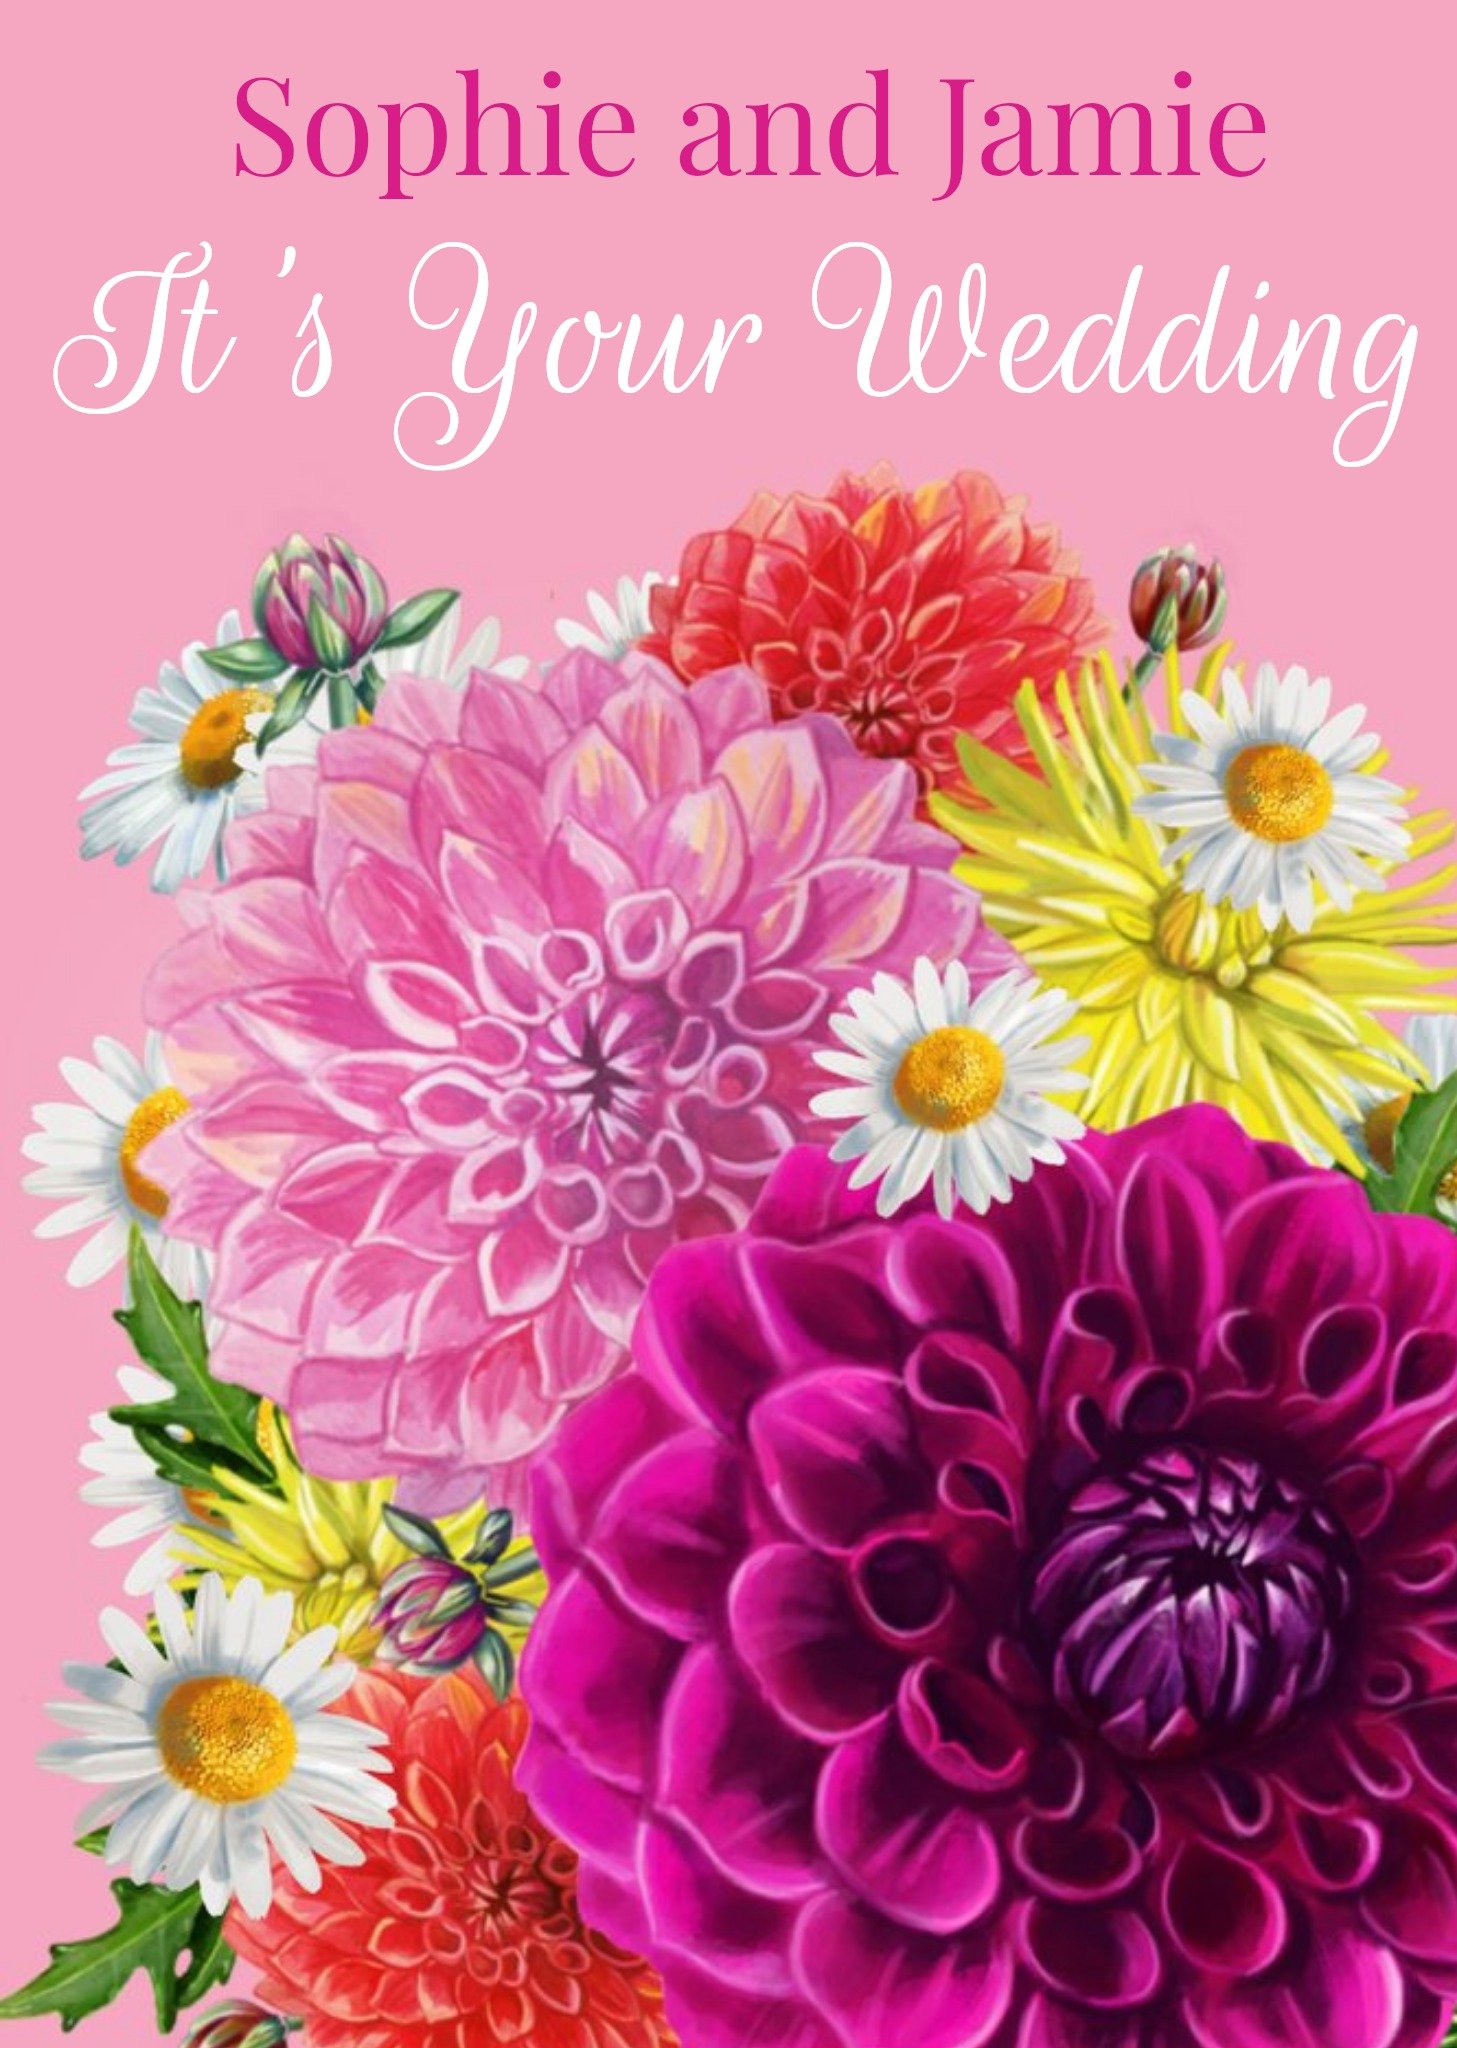 Moonpig Flowers Illustration Personalised Wedding Card, Large